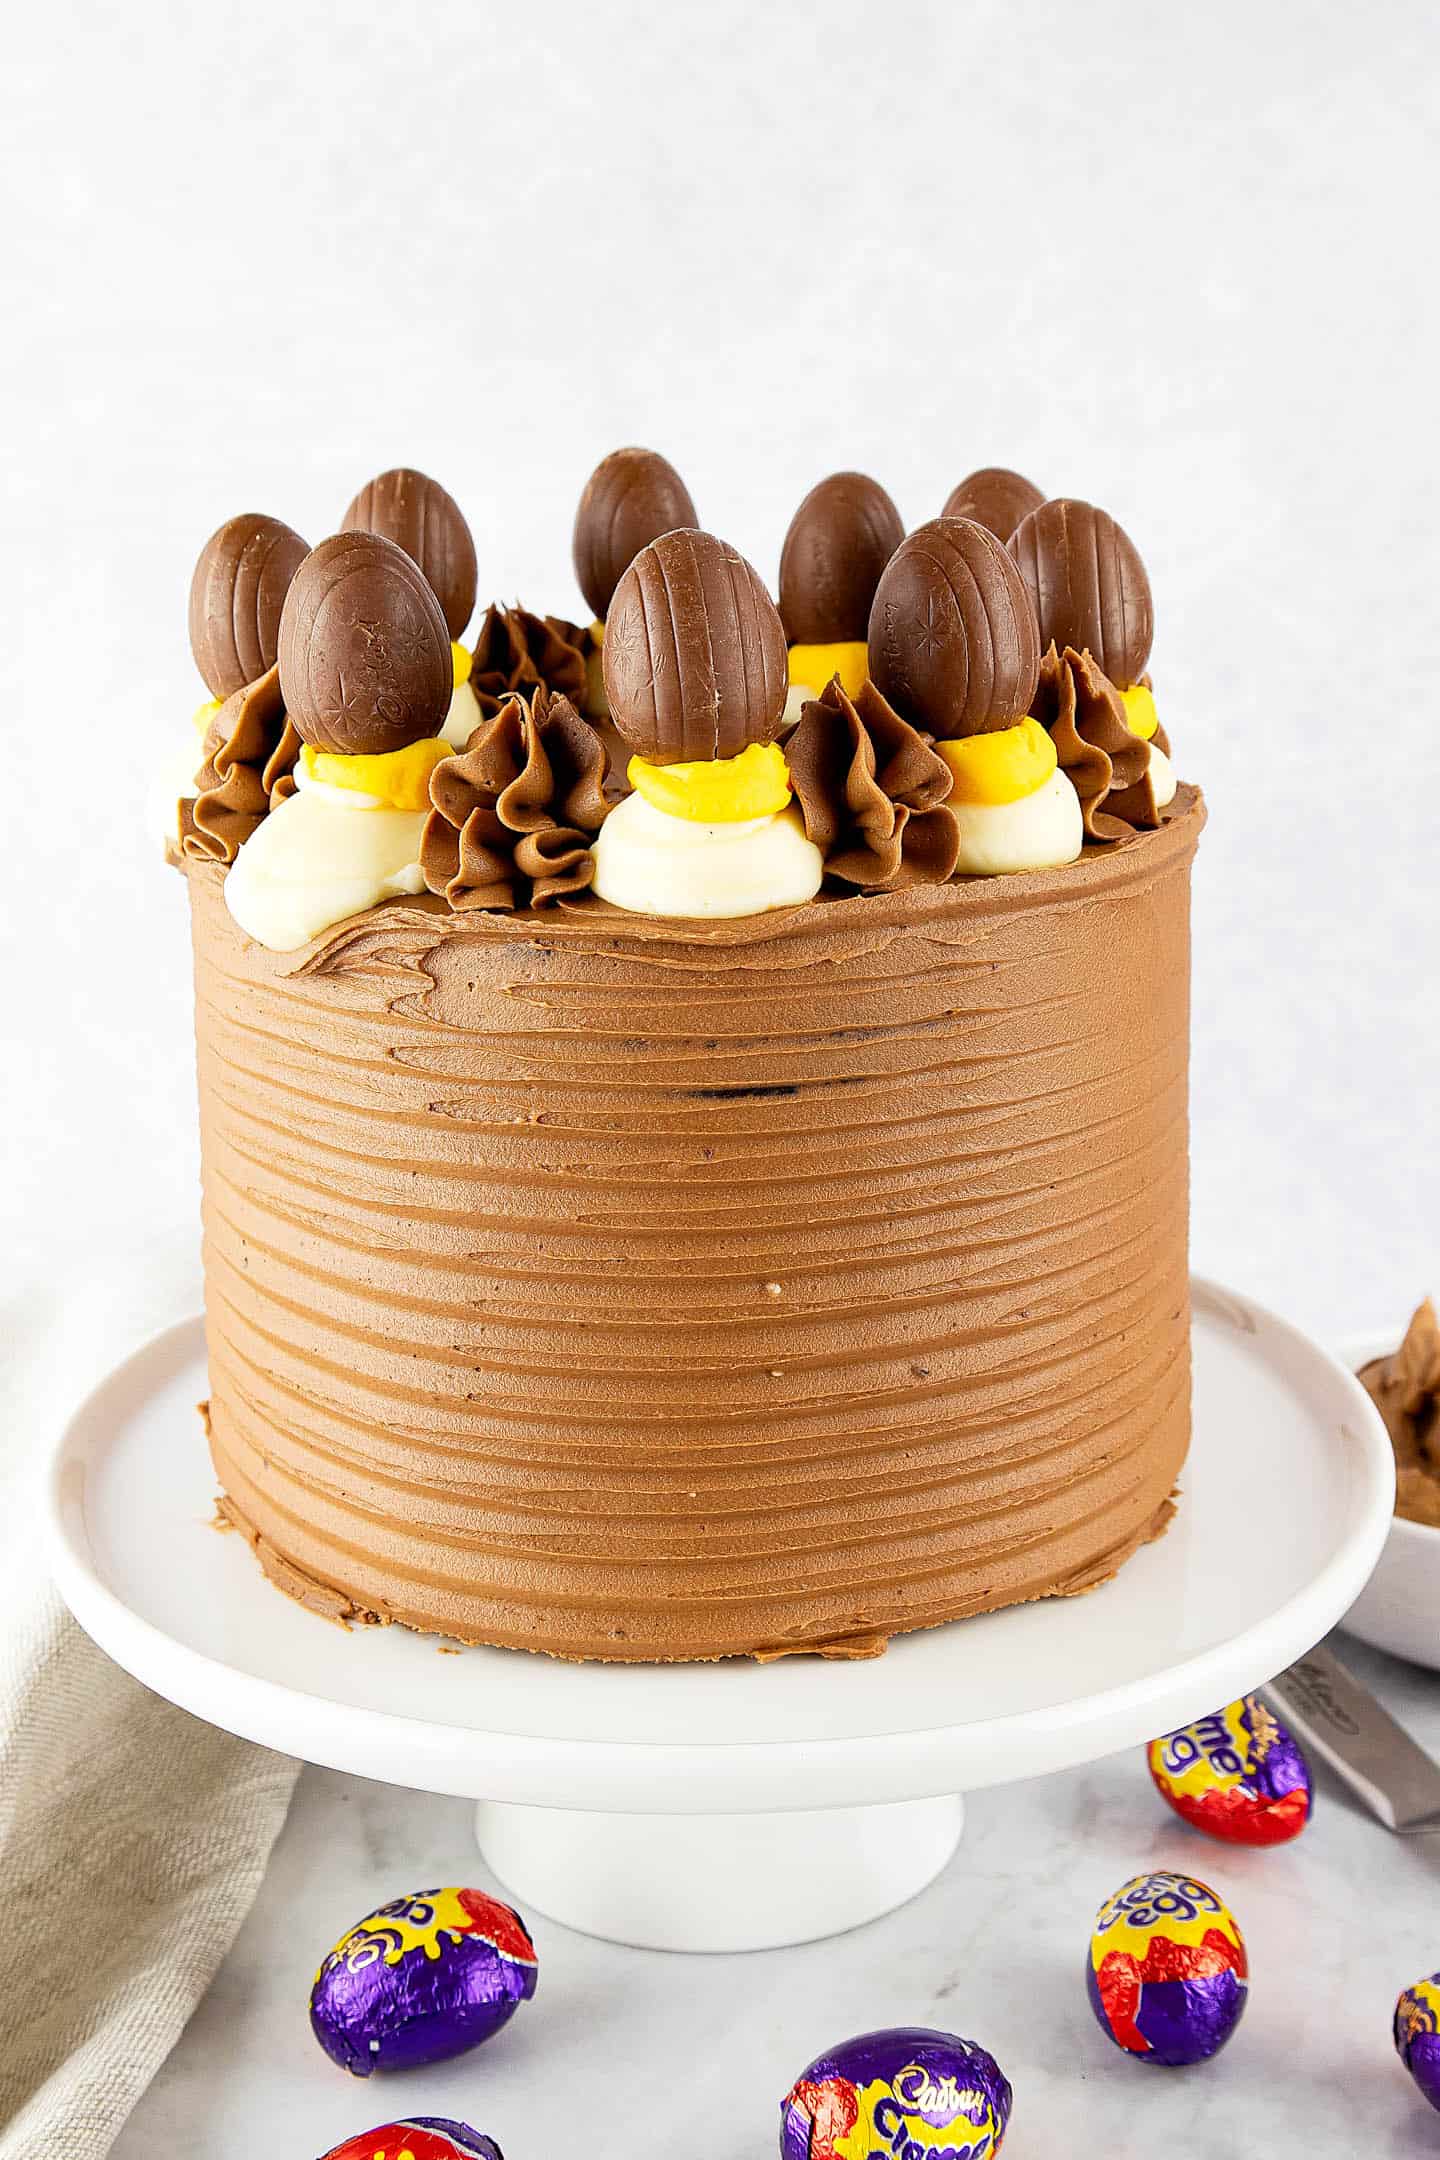 Chocolate Creme Egg cake on a white cake stand